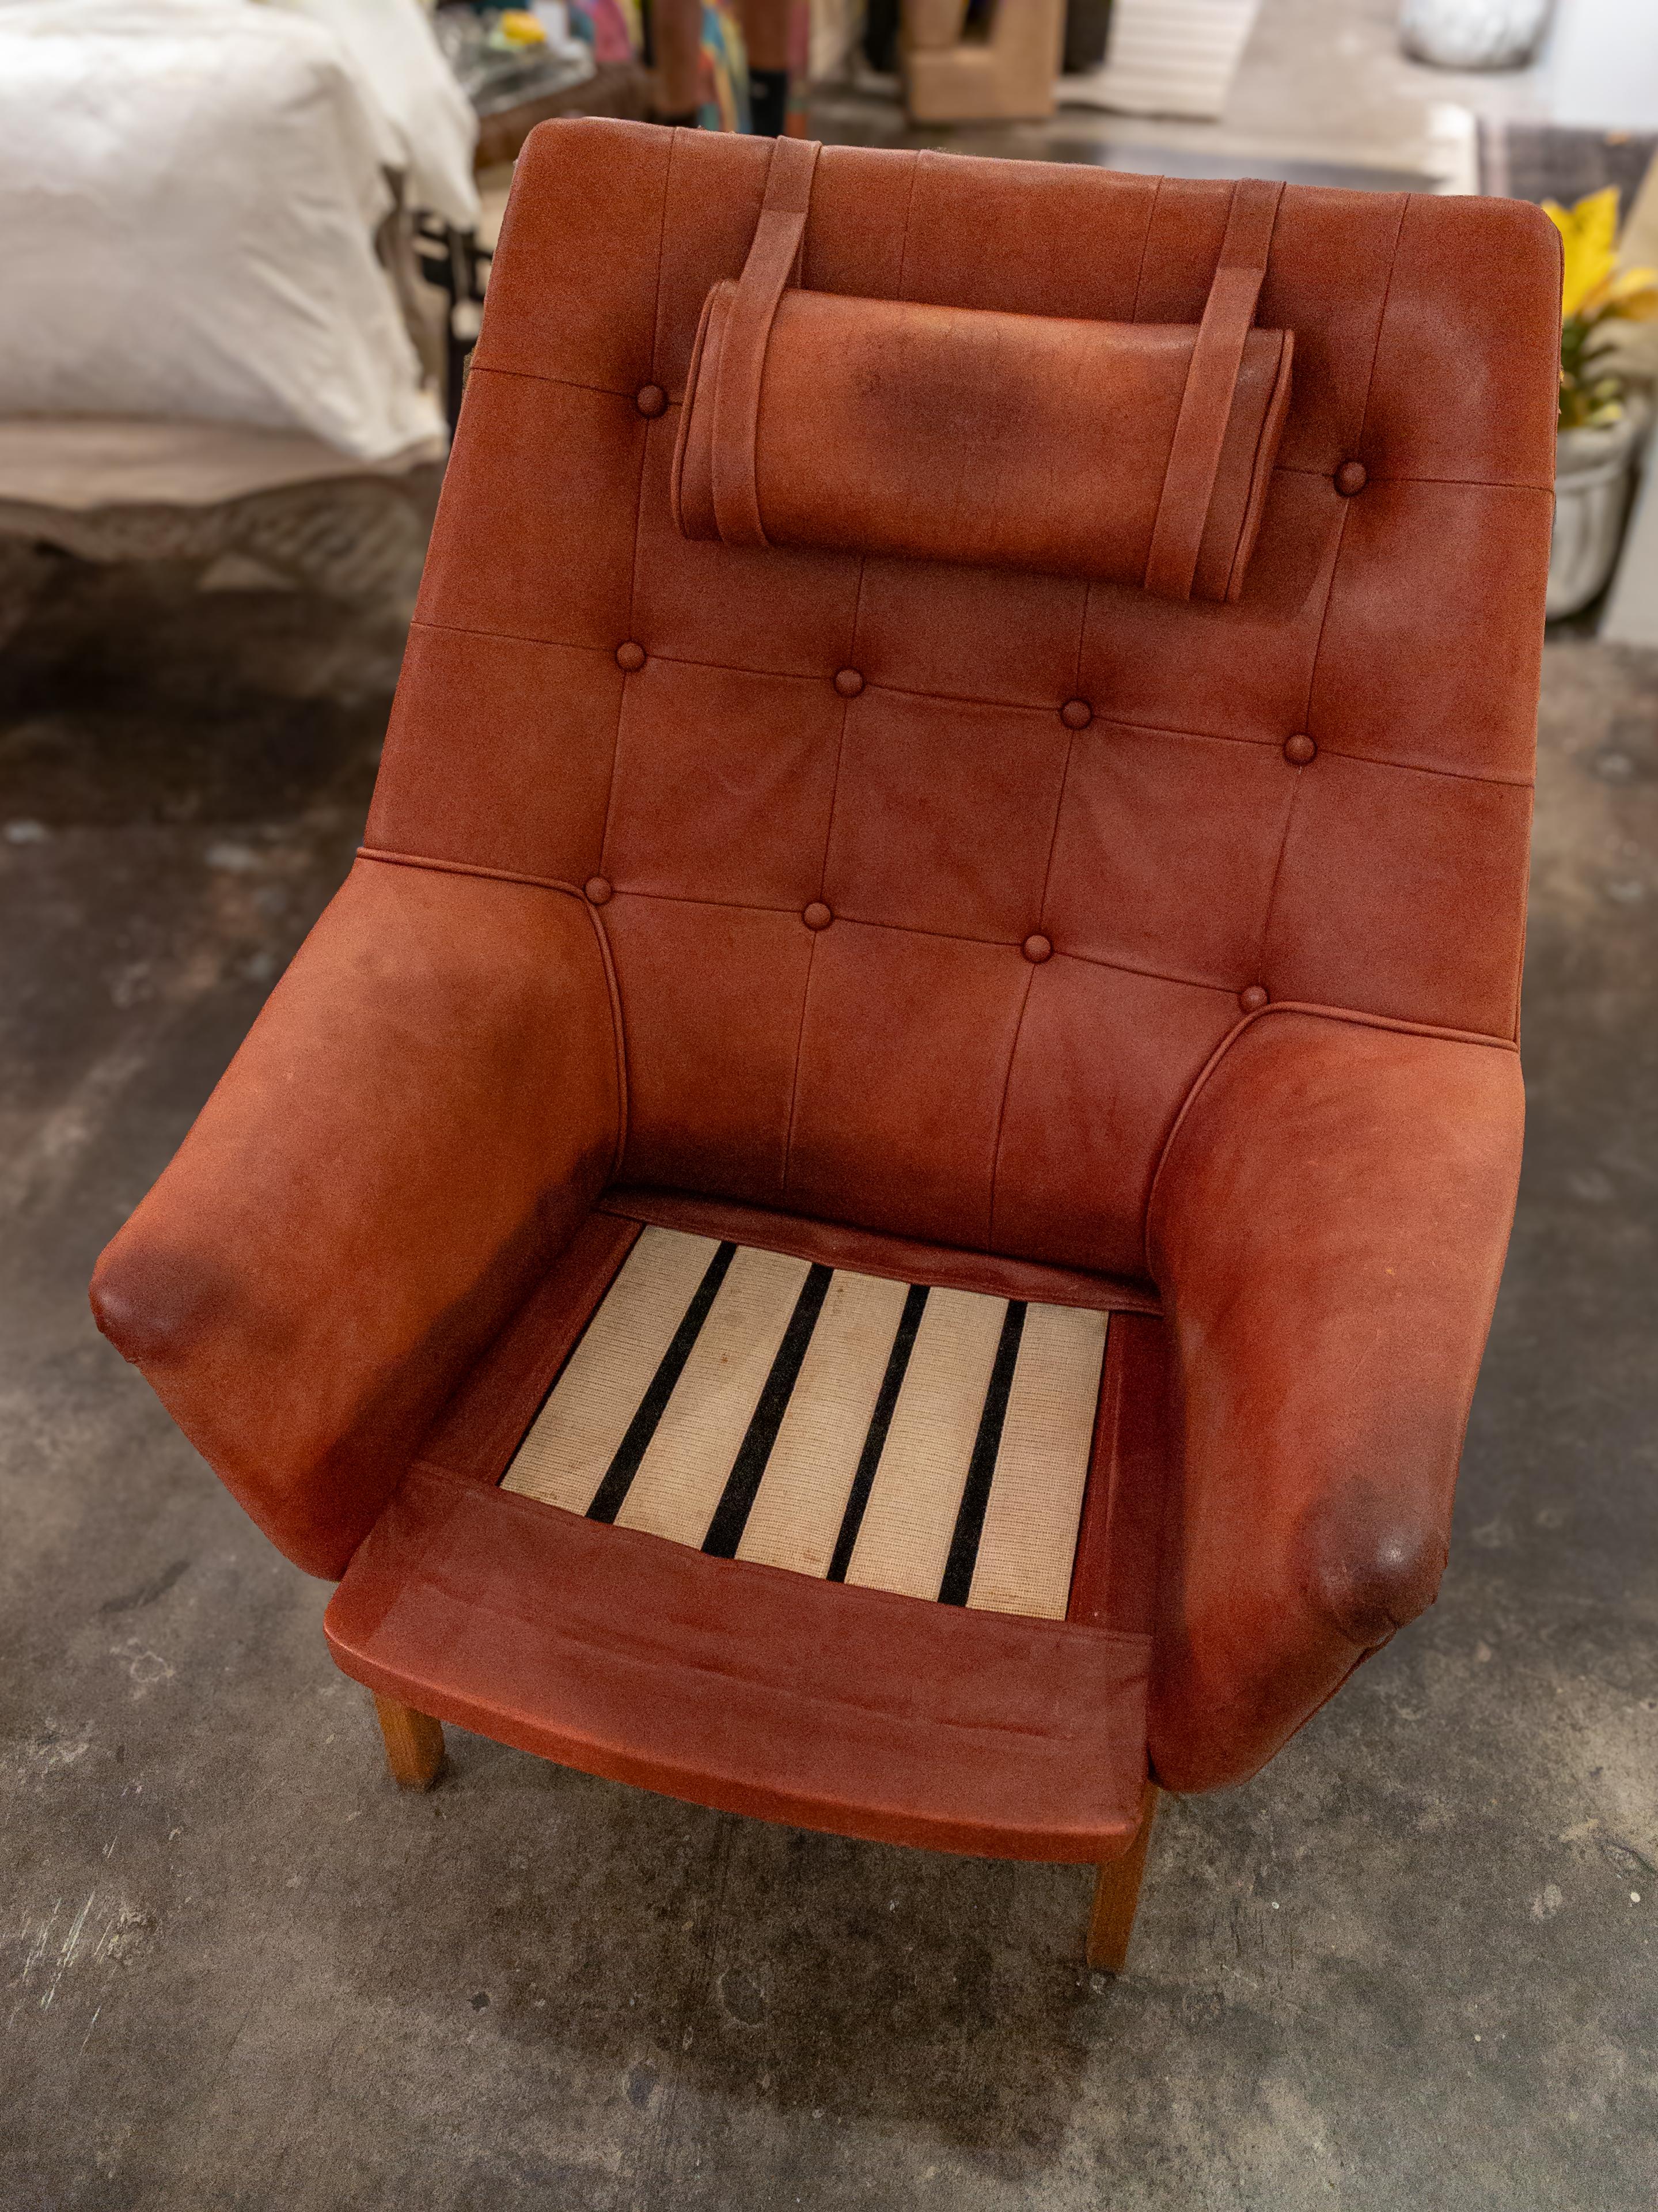 Tove & Edvard Kindt-Larsen Leather Lounge Chair For Sale 3